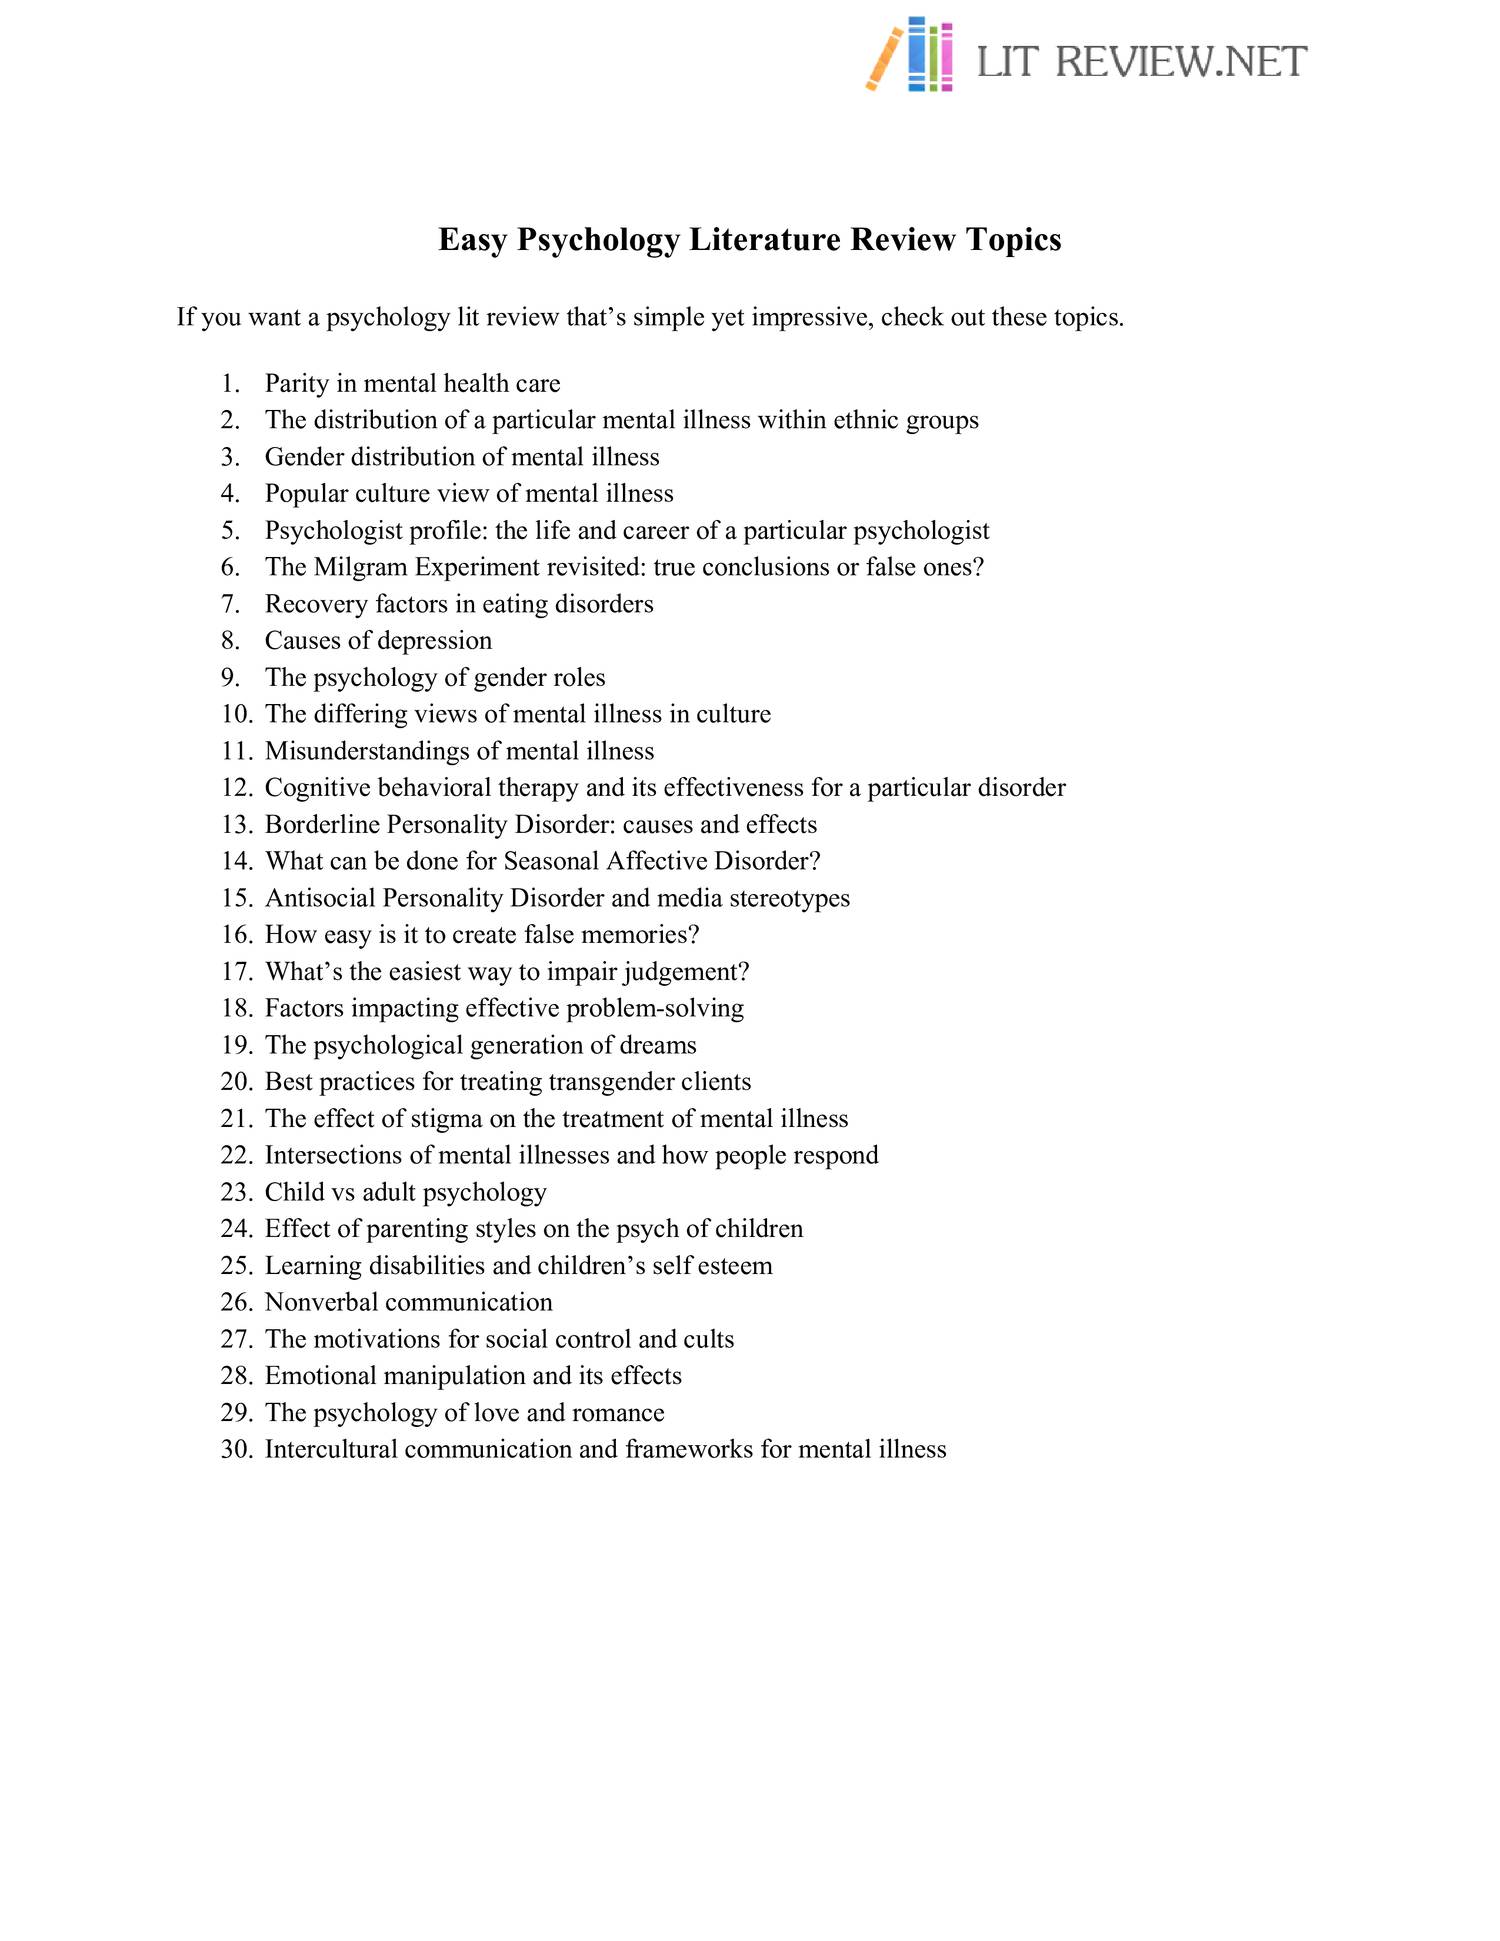 psychology literature review pdf